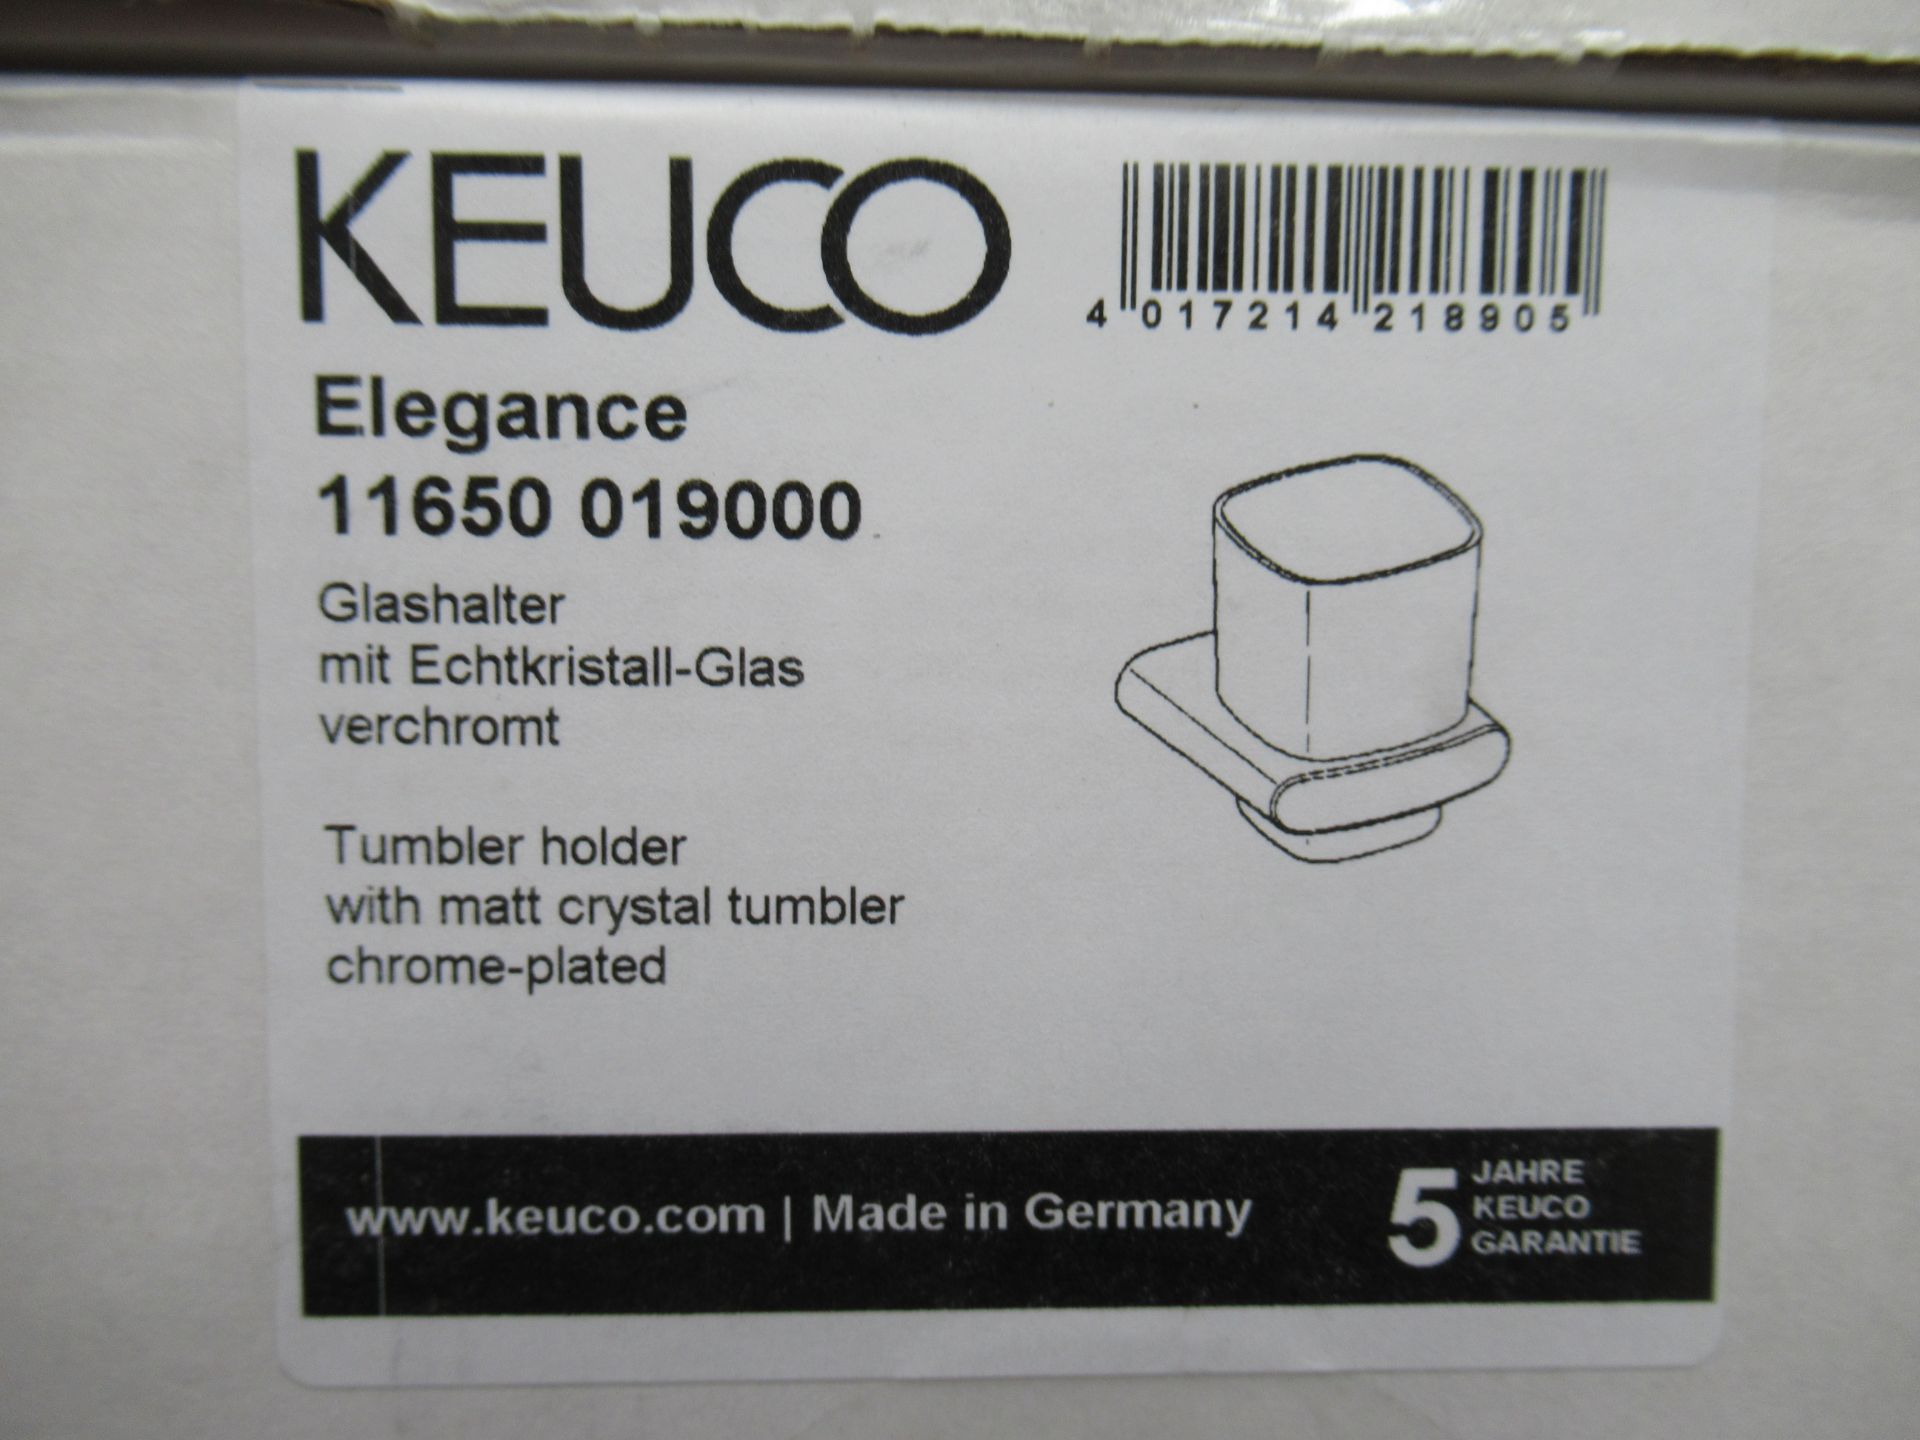 3 x Keuco Elegance Tumbler Holders Chrome Plated, P/N 11650-019000 - Bild 2 aus 2